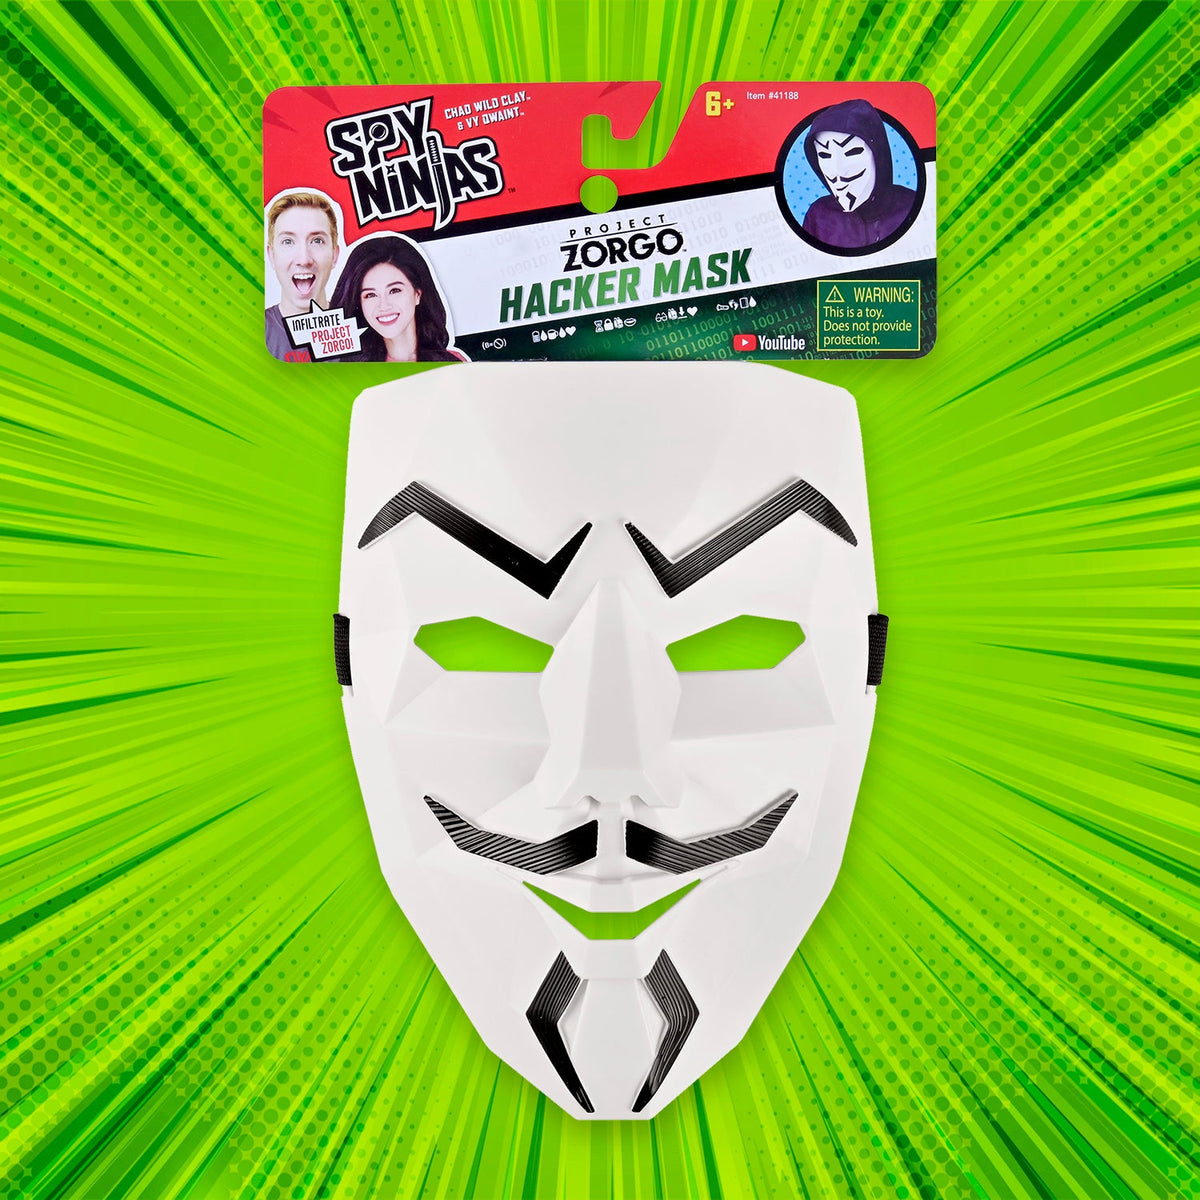 Project Zorgo‚Ñ¢ Hacker Mask